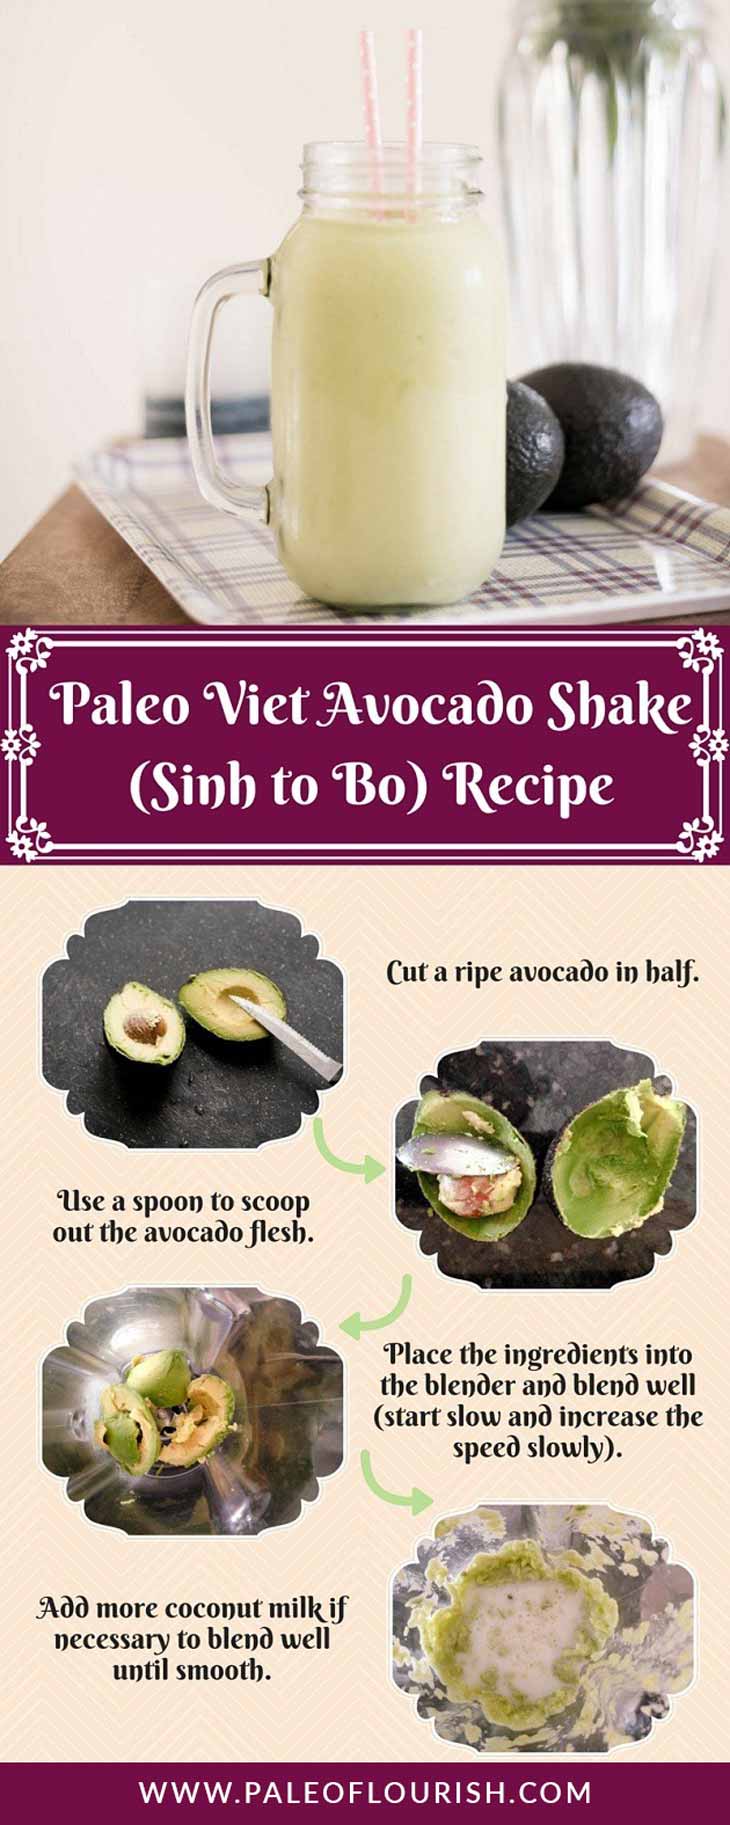 Paleo Viet Avocado Shake (Sinh to Bo) Recipe #paleo #recipes #gluten-free https://paleoflourish.com/paleo-viet-avocado-shake-sinh-to-bo-recipe